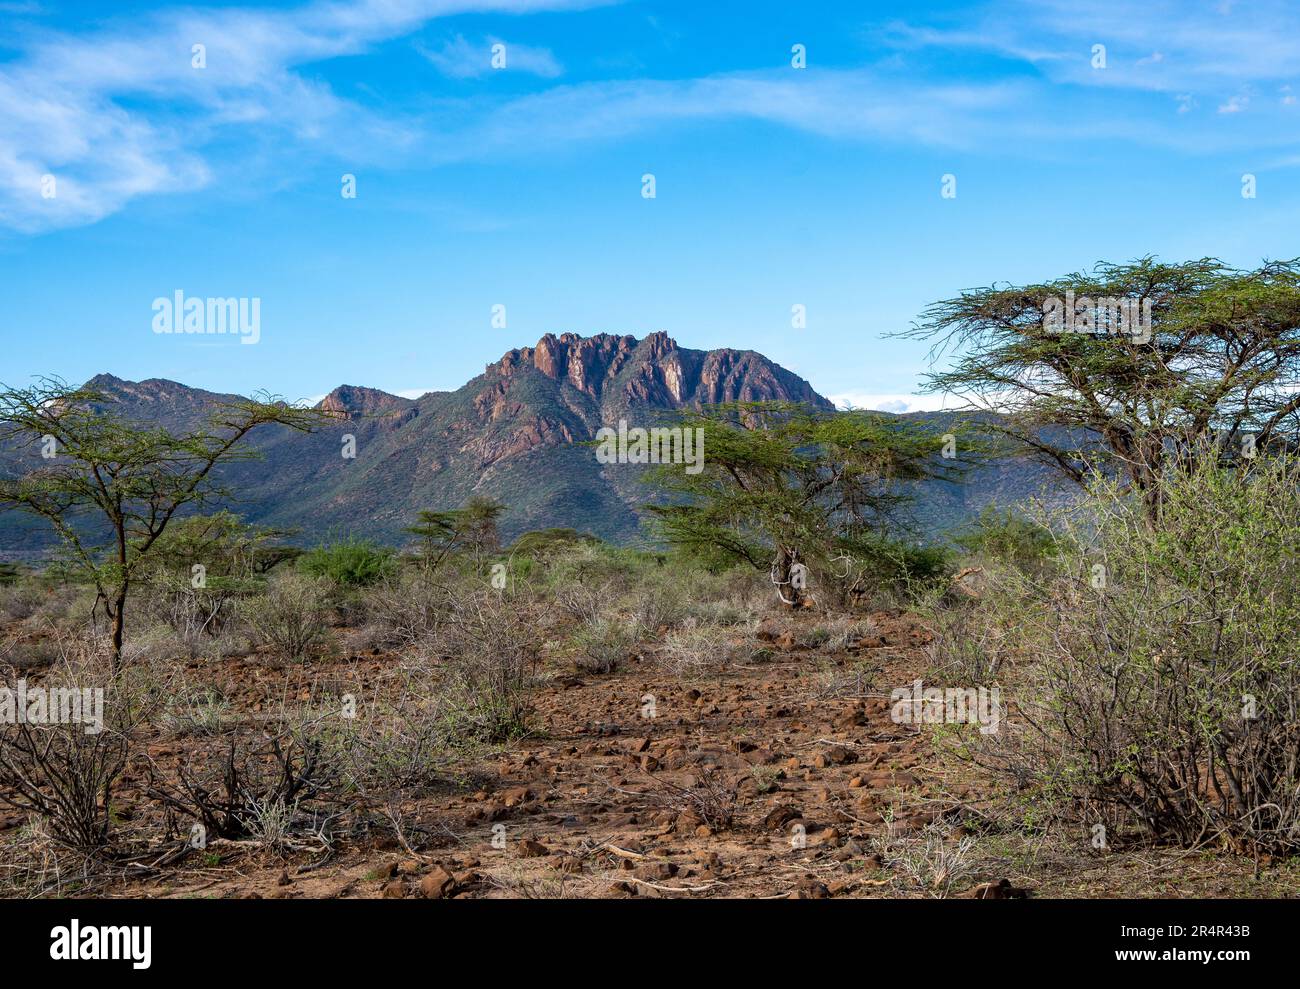 Mountain landscape at the Shaba National Reserve. Kenya, Africa. Stock Photo